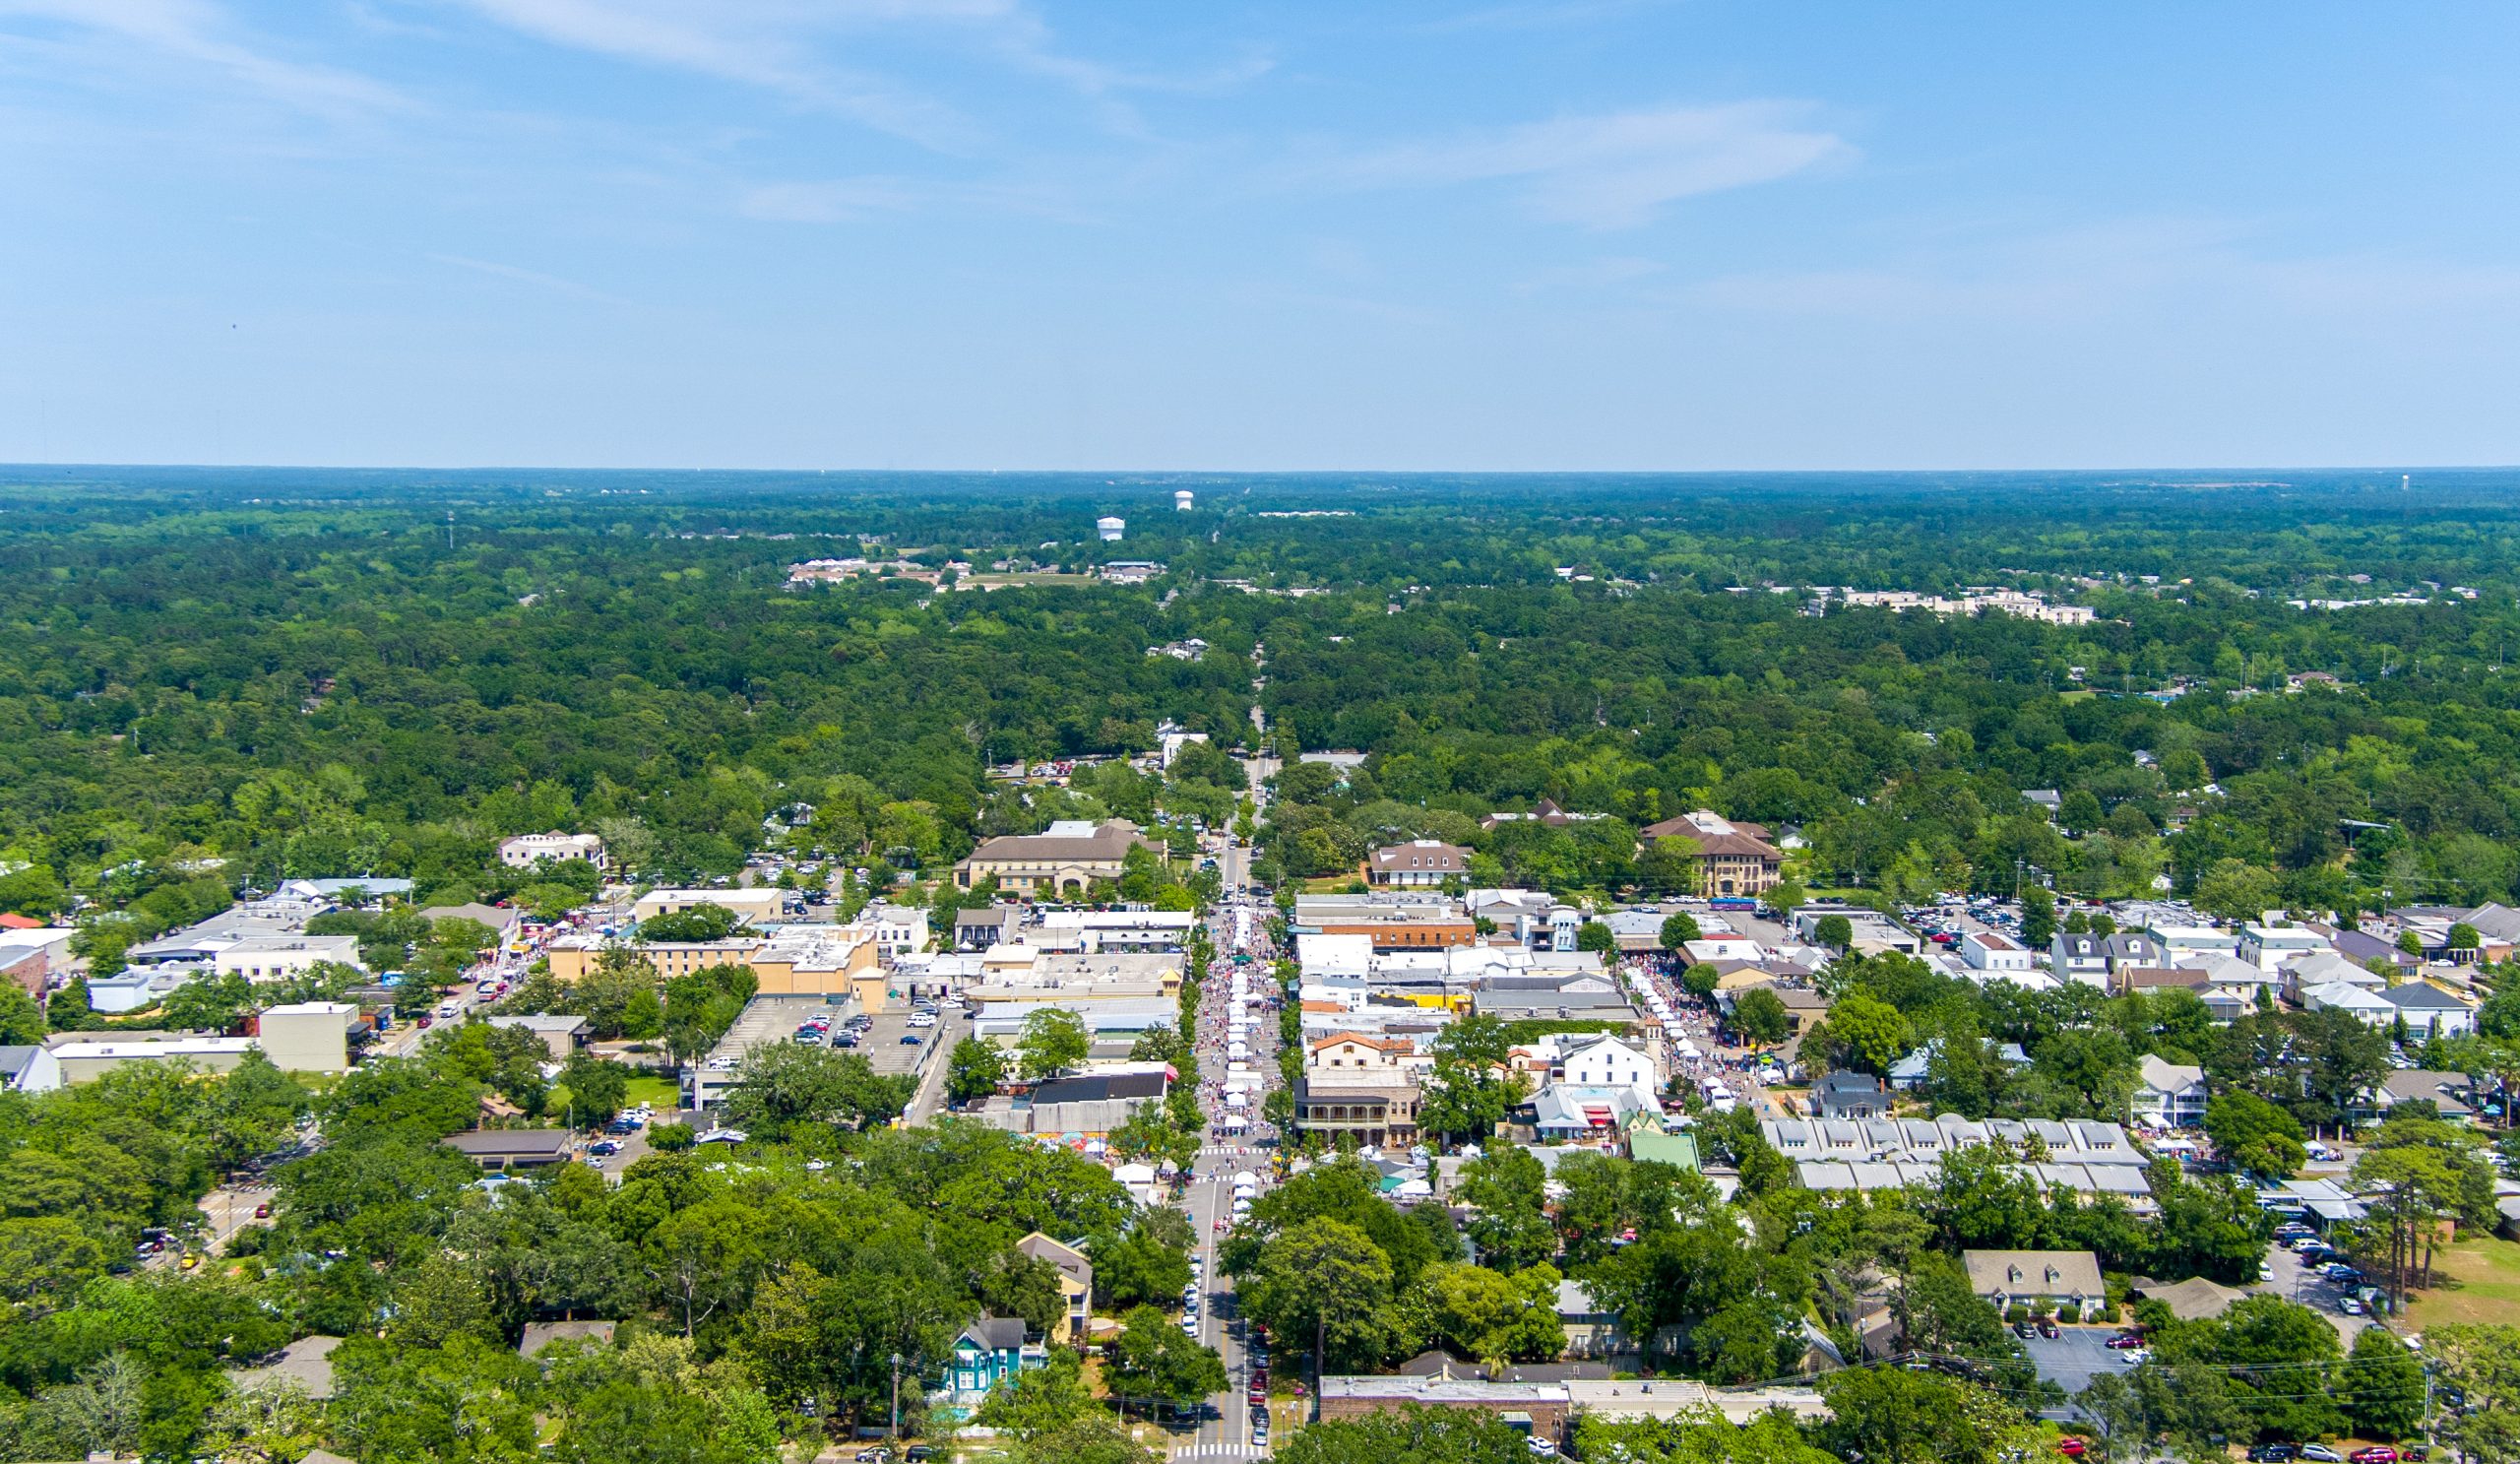 An aerial view of Fairhope, Alabama.